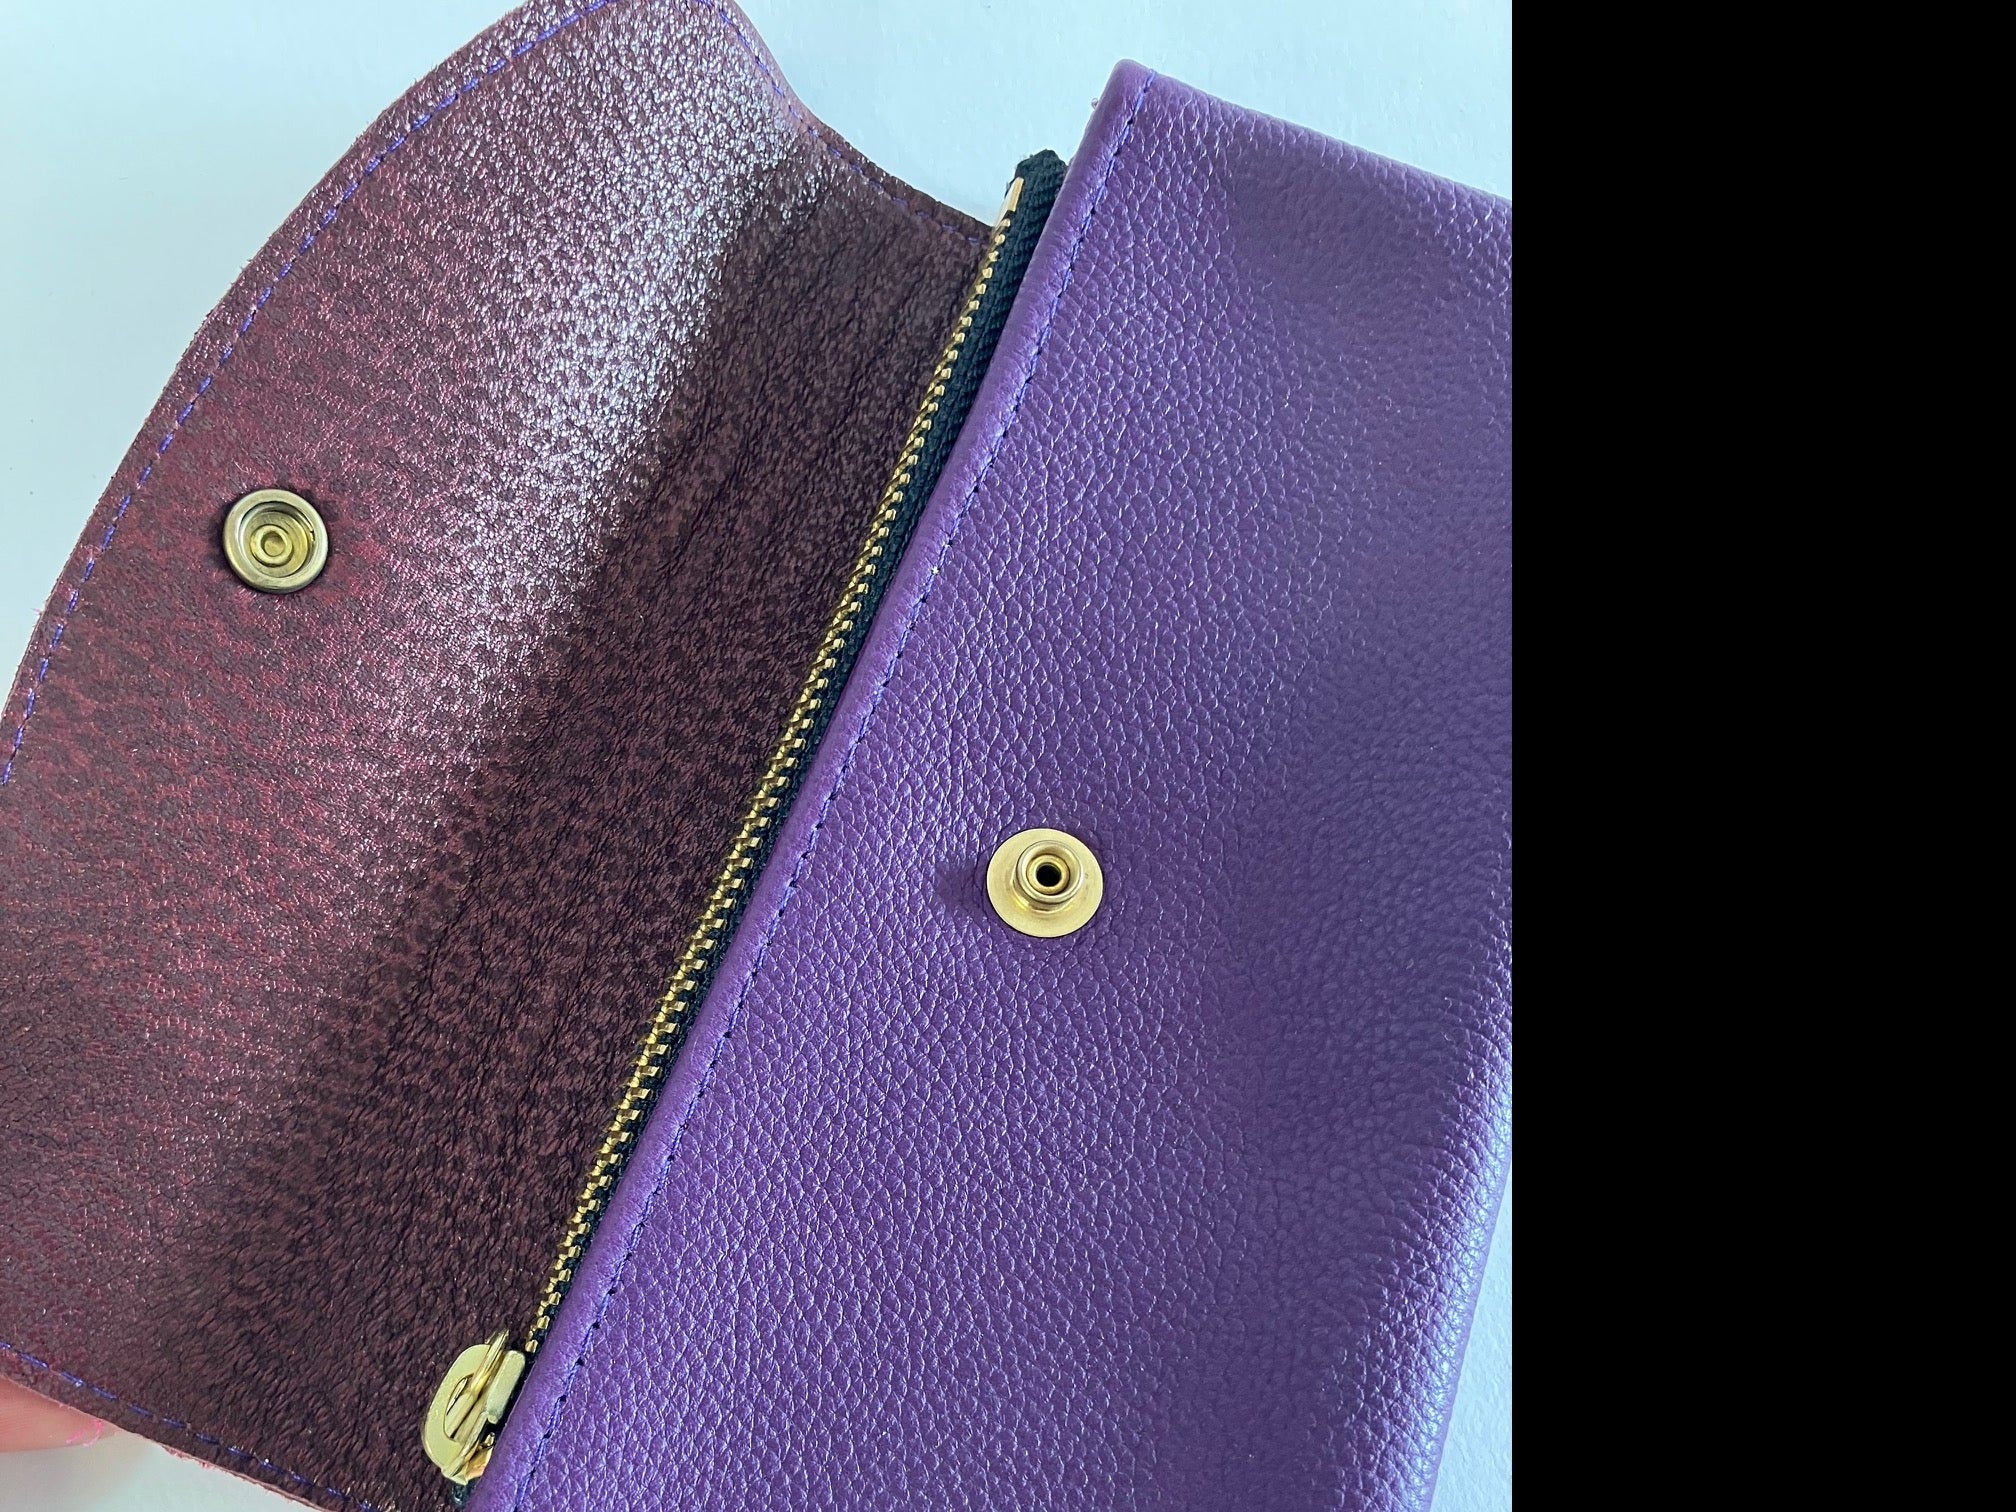 SAMPLE neon pink and purple Minimalist leather wallet